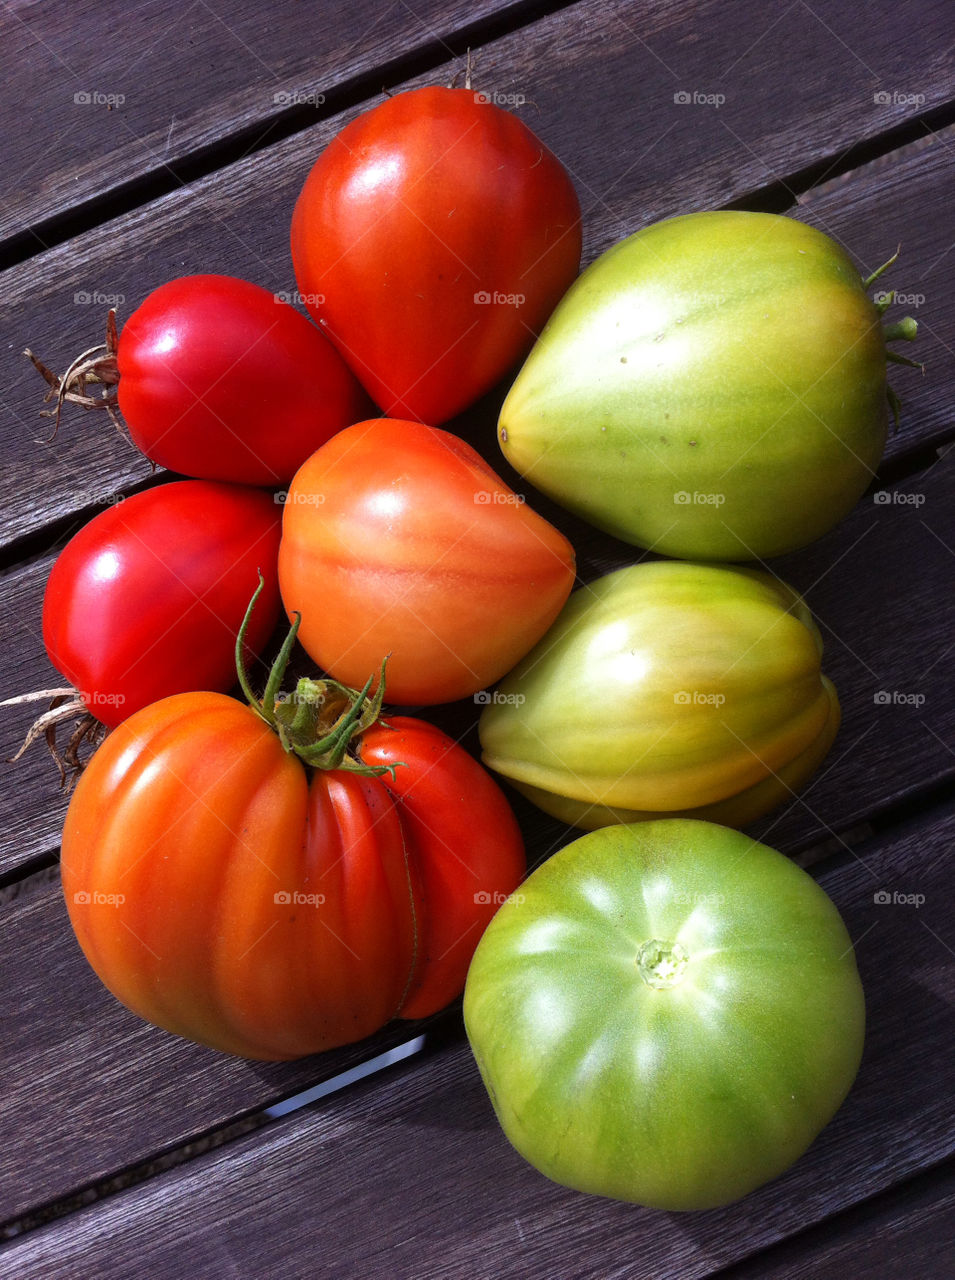 sweden garden tomatoes vegetables by hallis